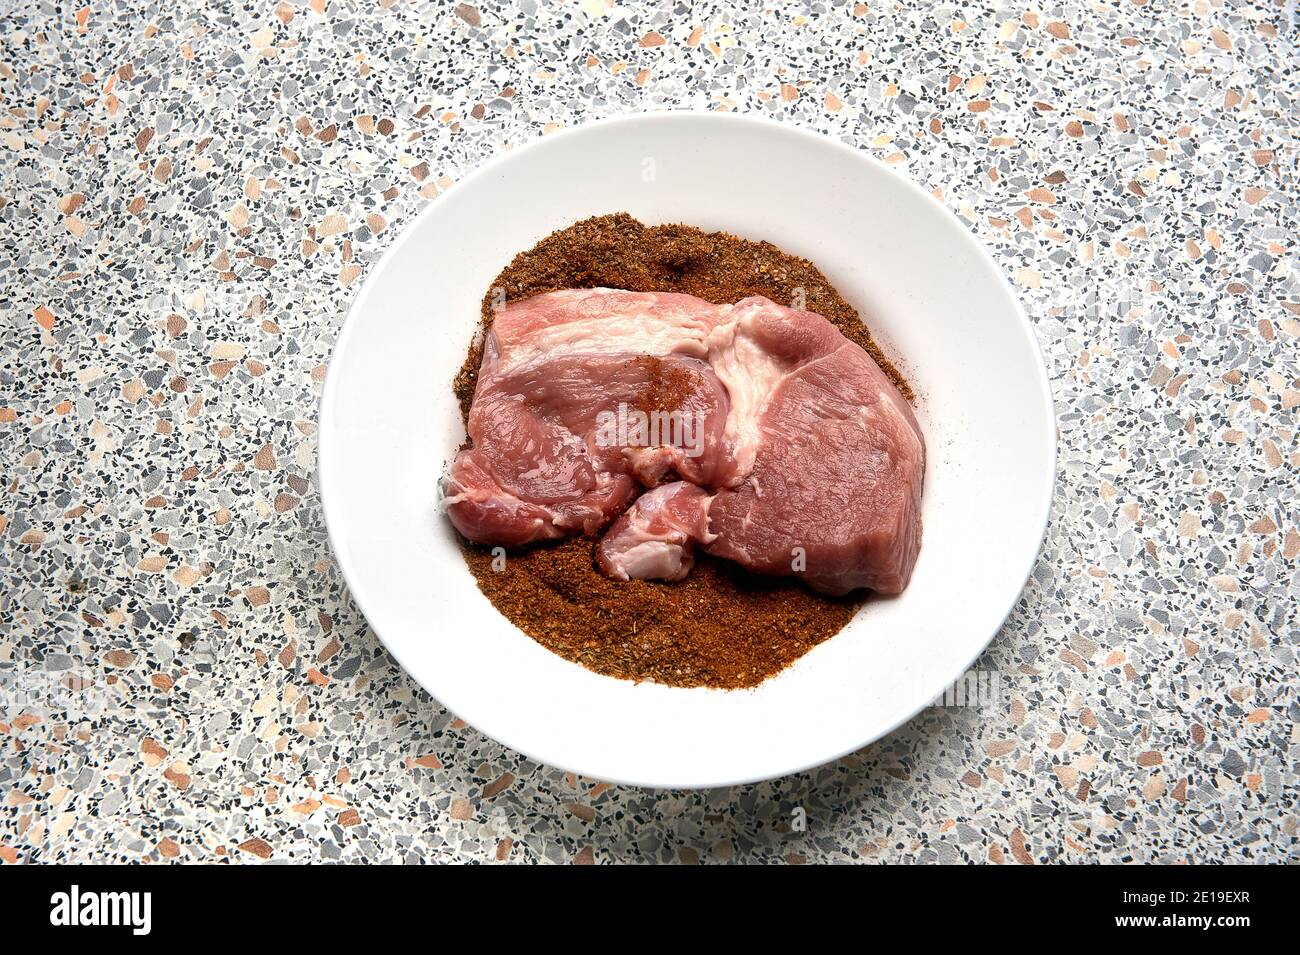 Un pedazo de carne picada en un plato antes de freír Foto de stock